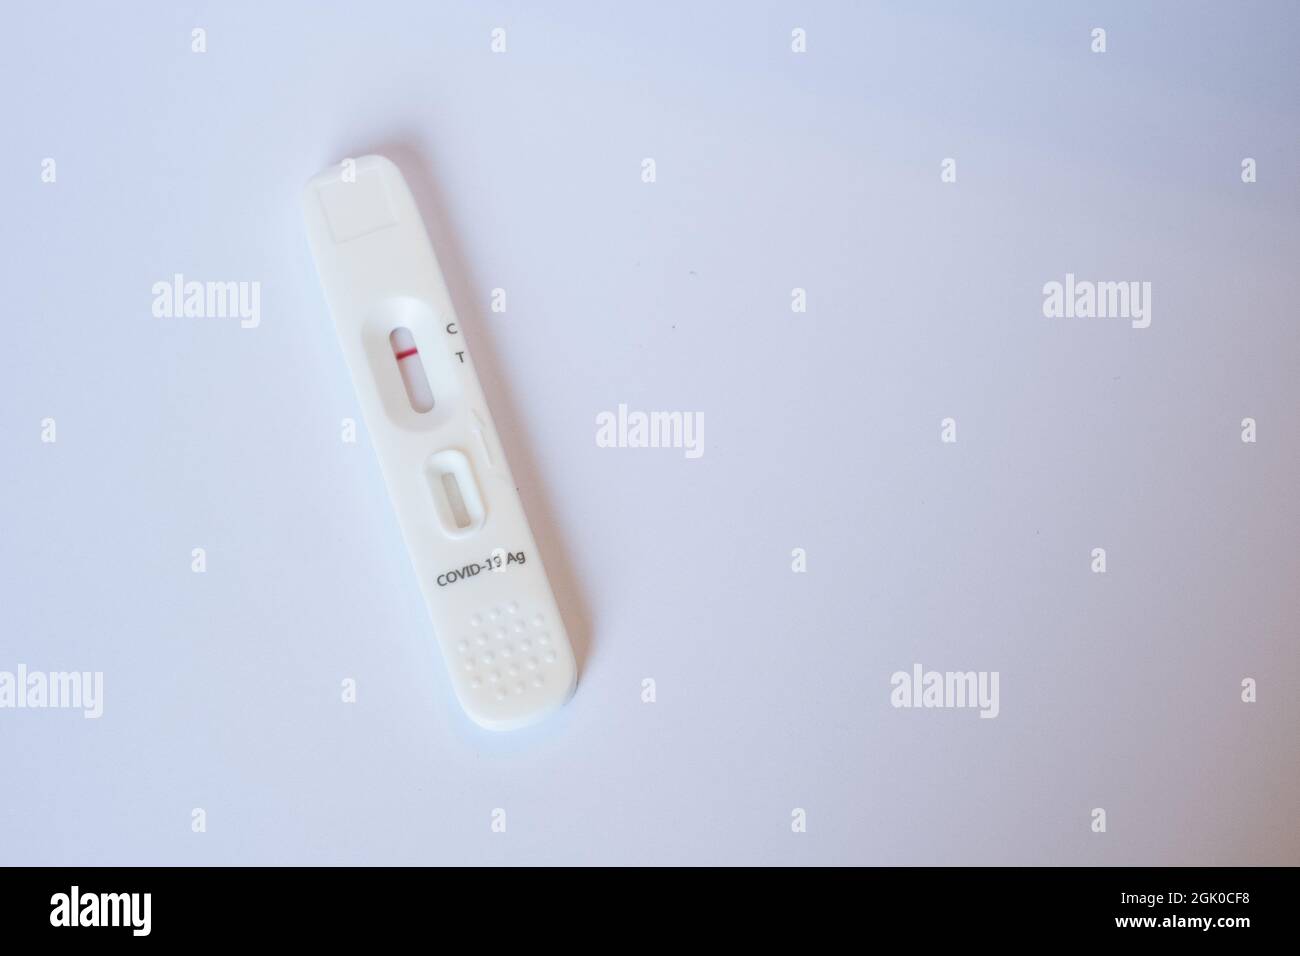 COVID-19 Ag Test cassette for self-testing on white background. Corona virus diagnosis. Stock Photo